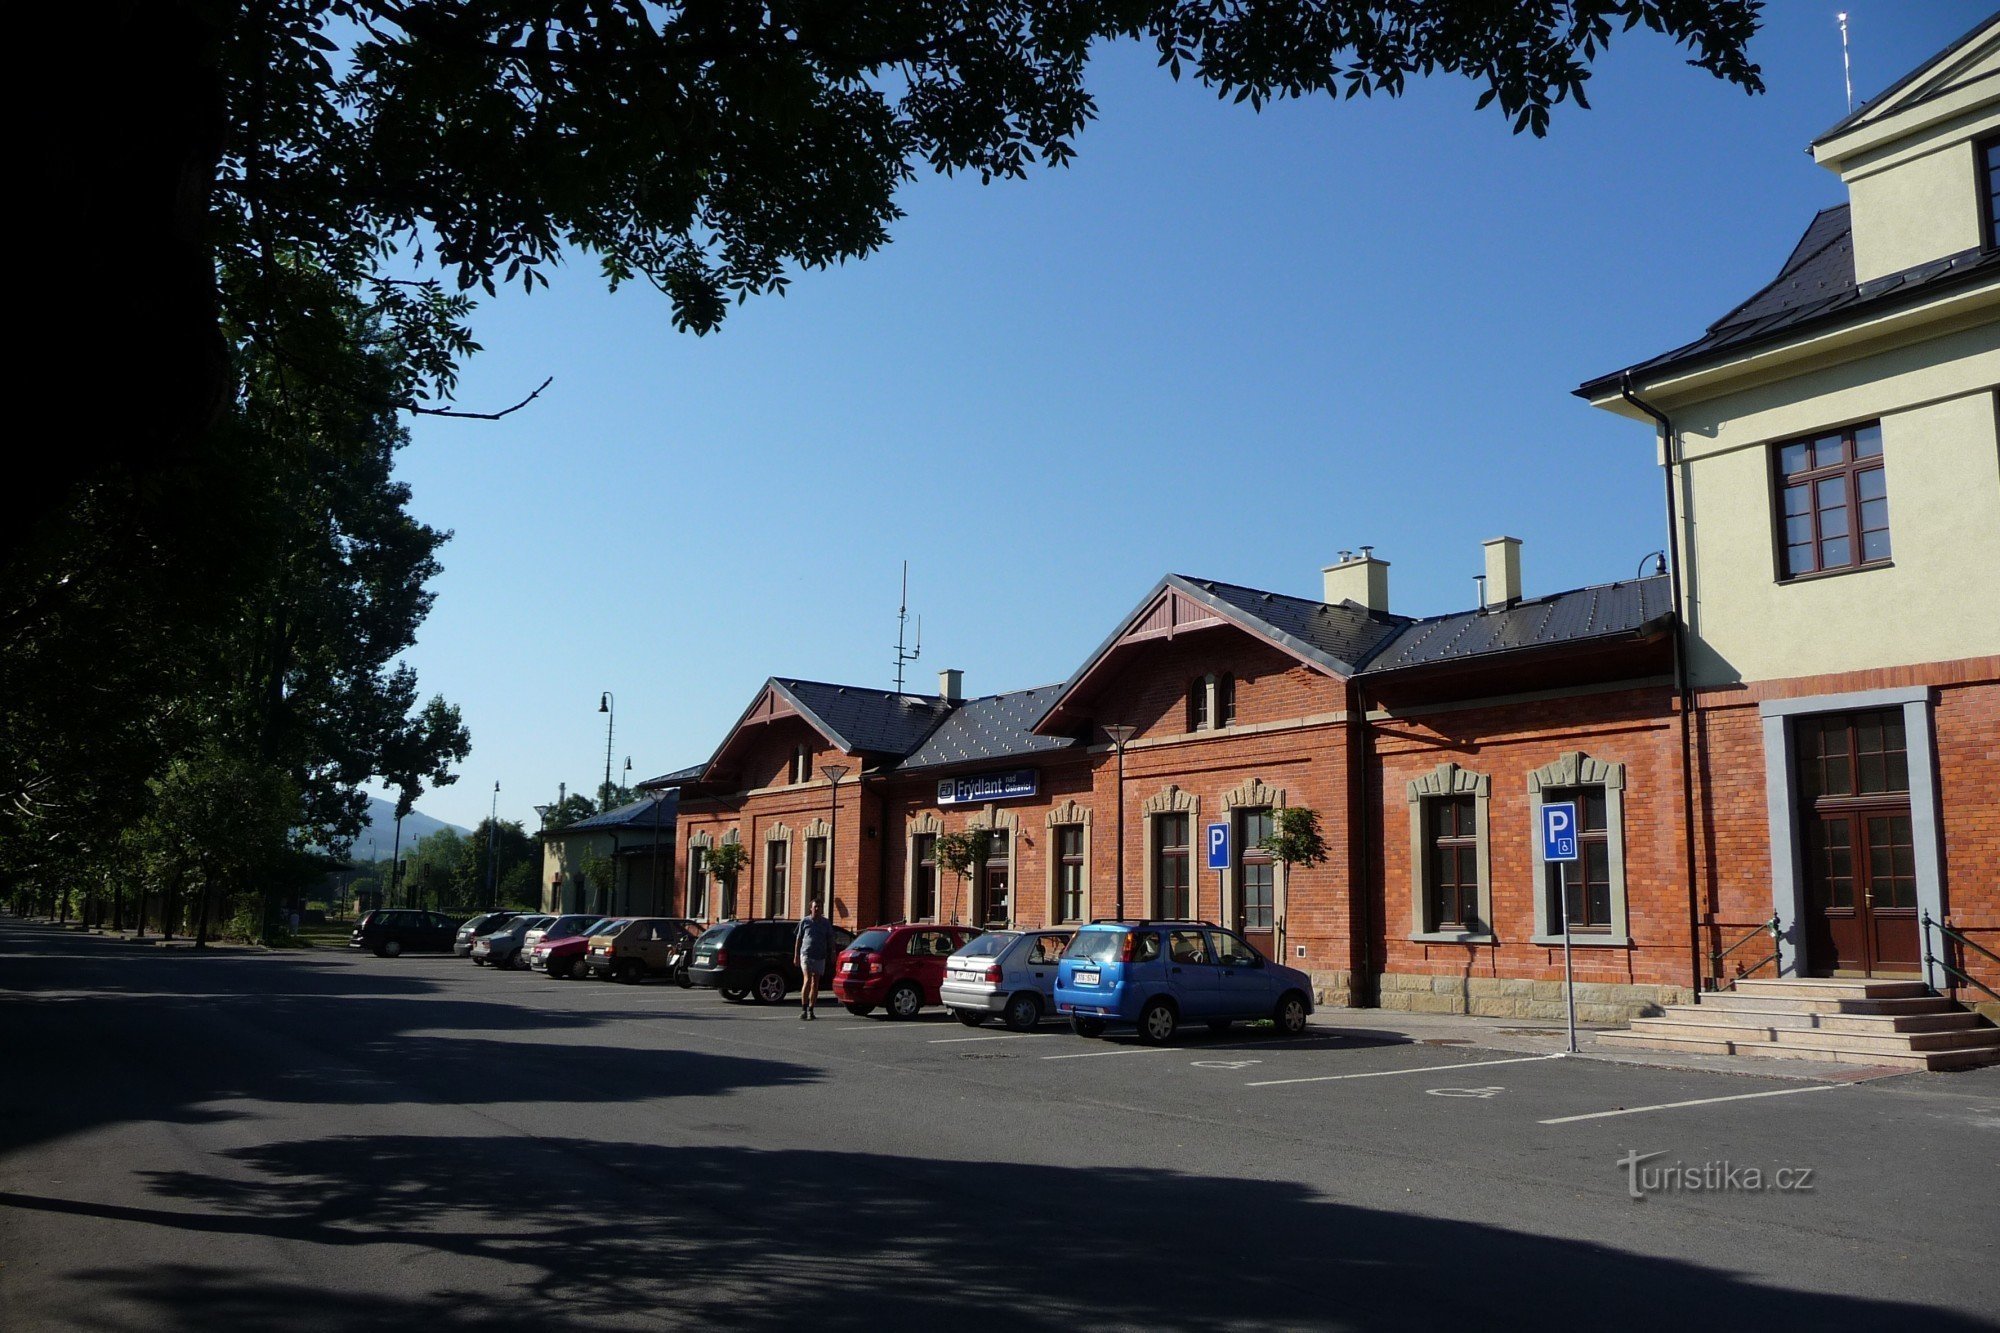 Station in Frýdlant n.O.